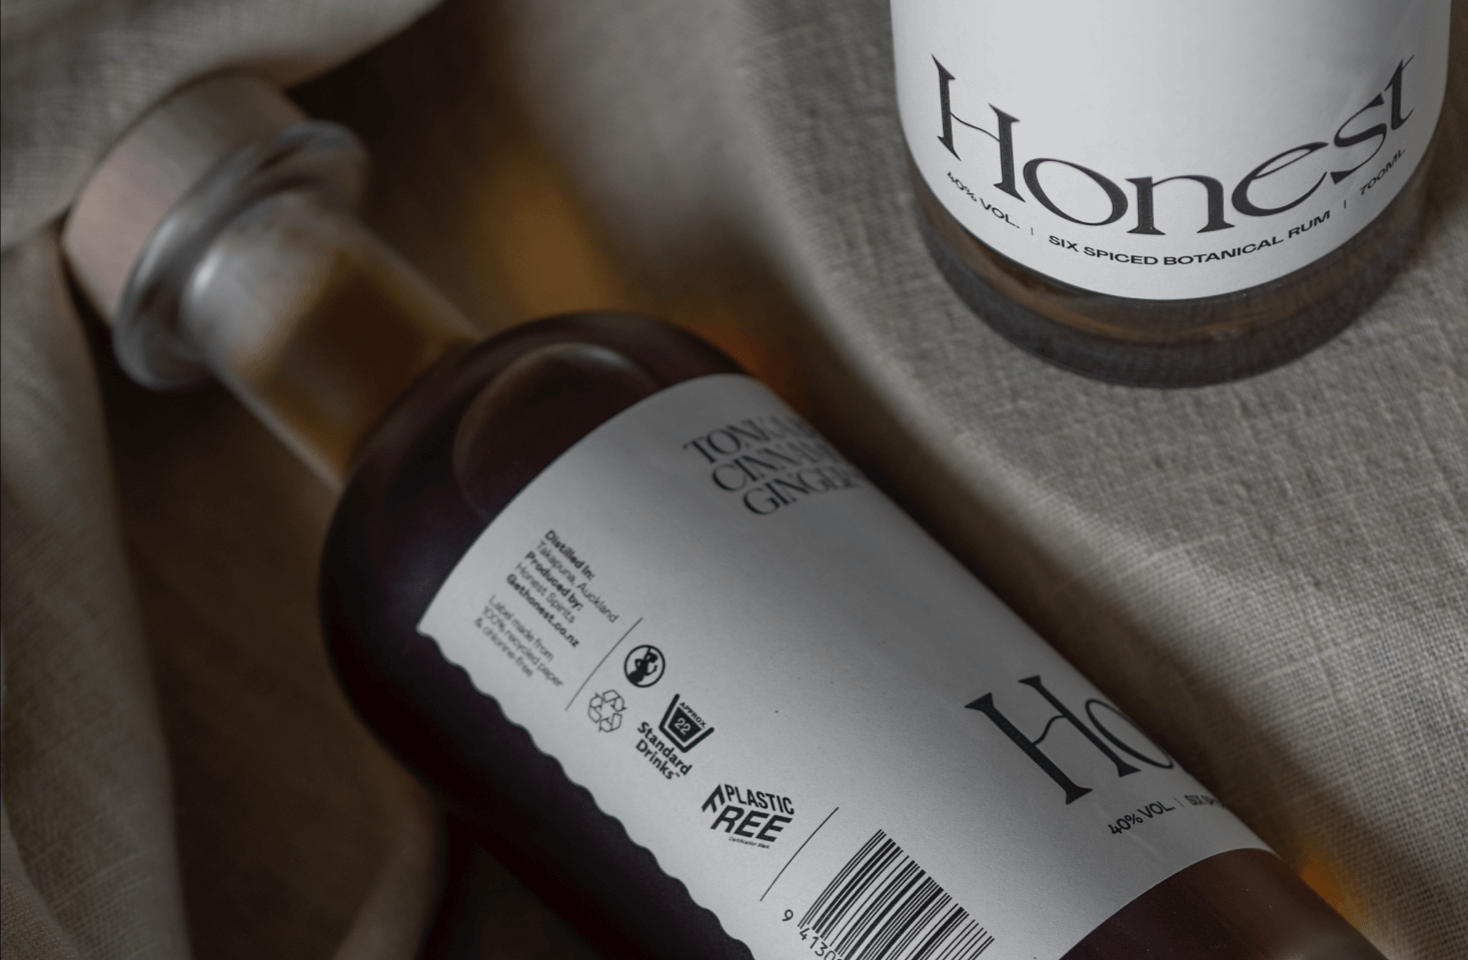 Image of Honest Spirits – Six Spiced Botanical Rum